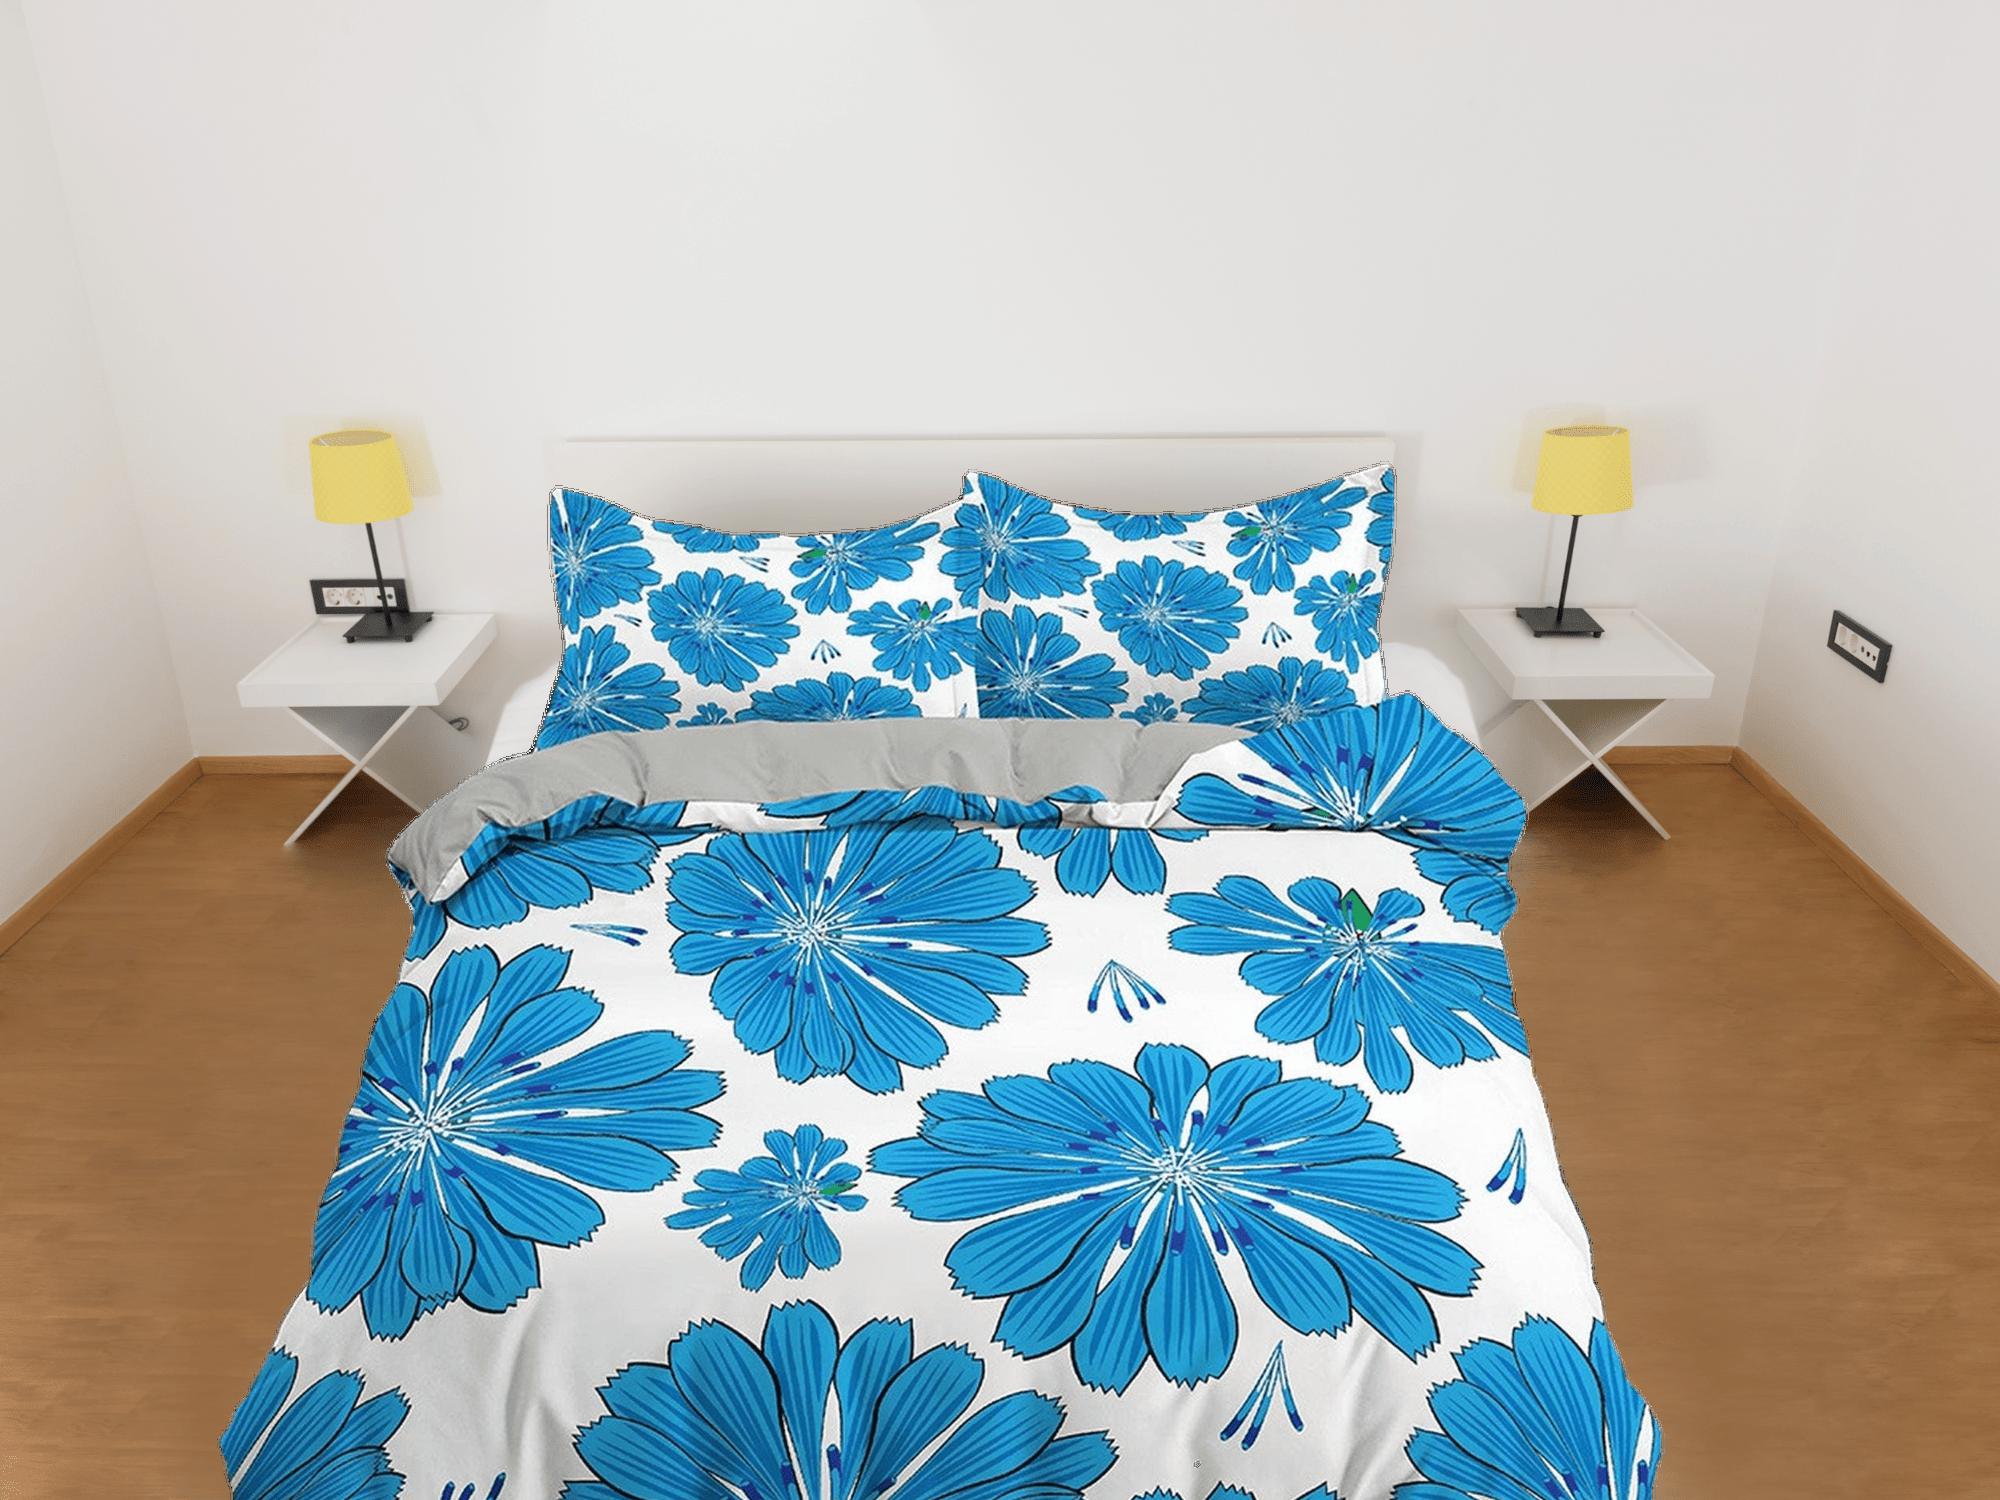 daintyduvet Blue floral duvet cover colorful bedding, teen girl bedroom, baby girl crib bedding boho maximalist bedspread aesthetic bedding